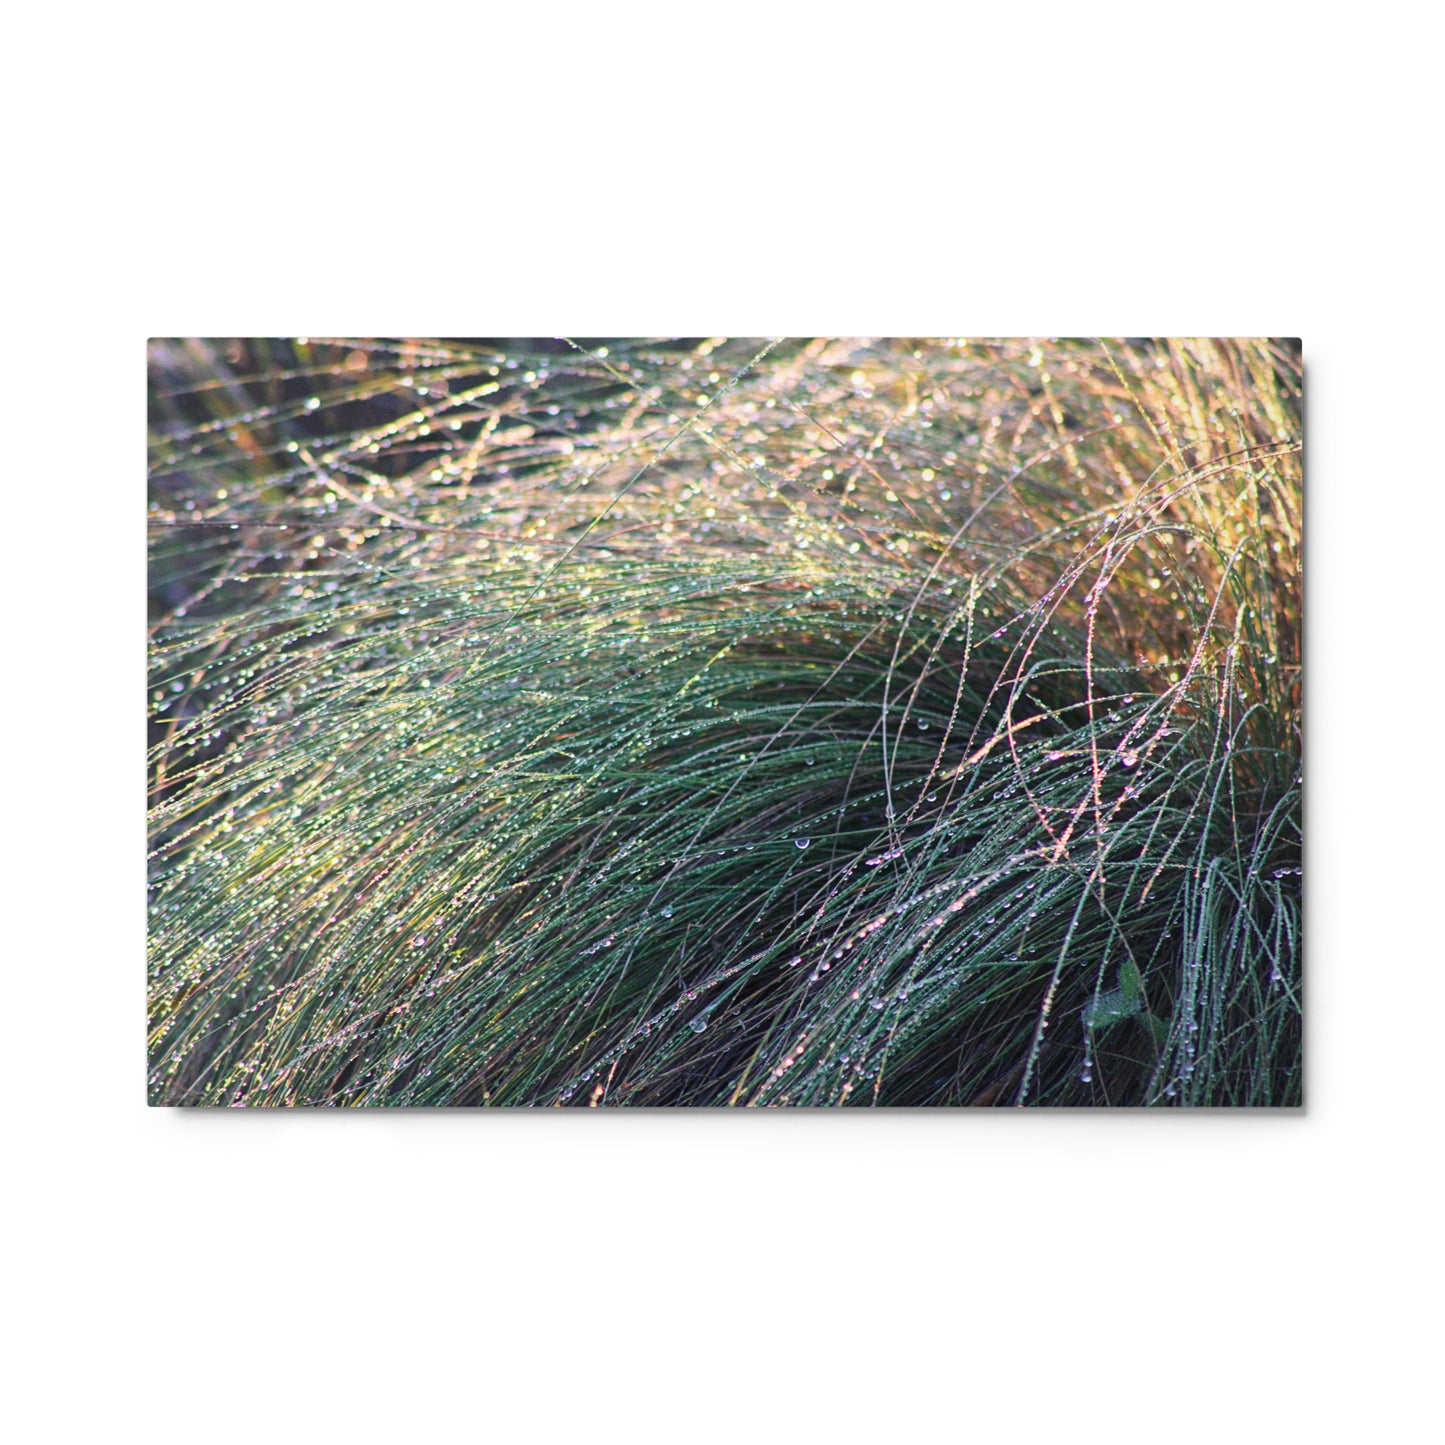 Grass 4 by C. Kovalick